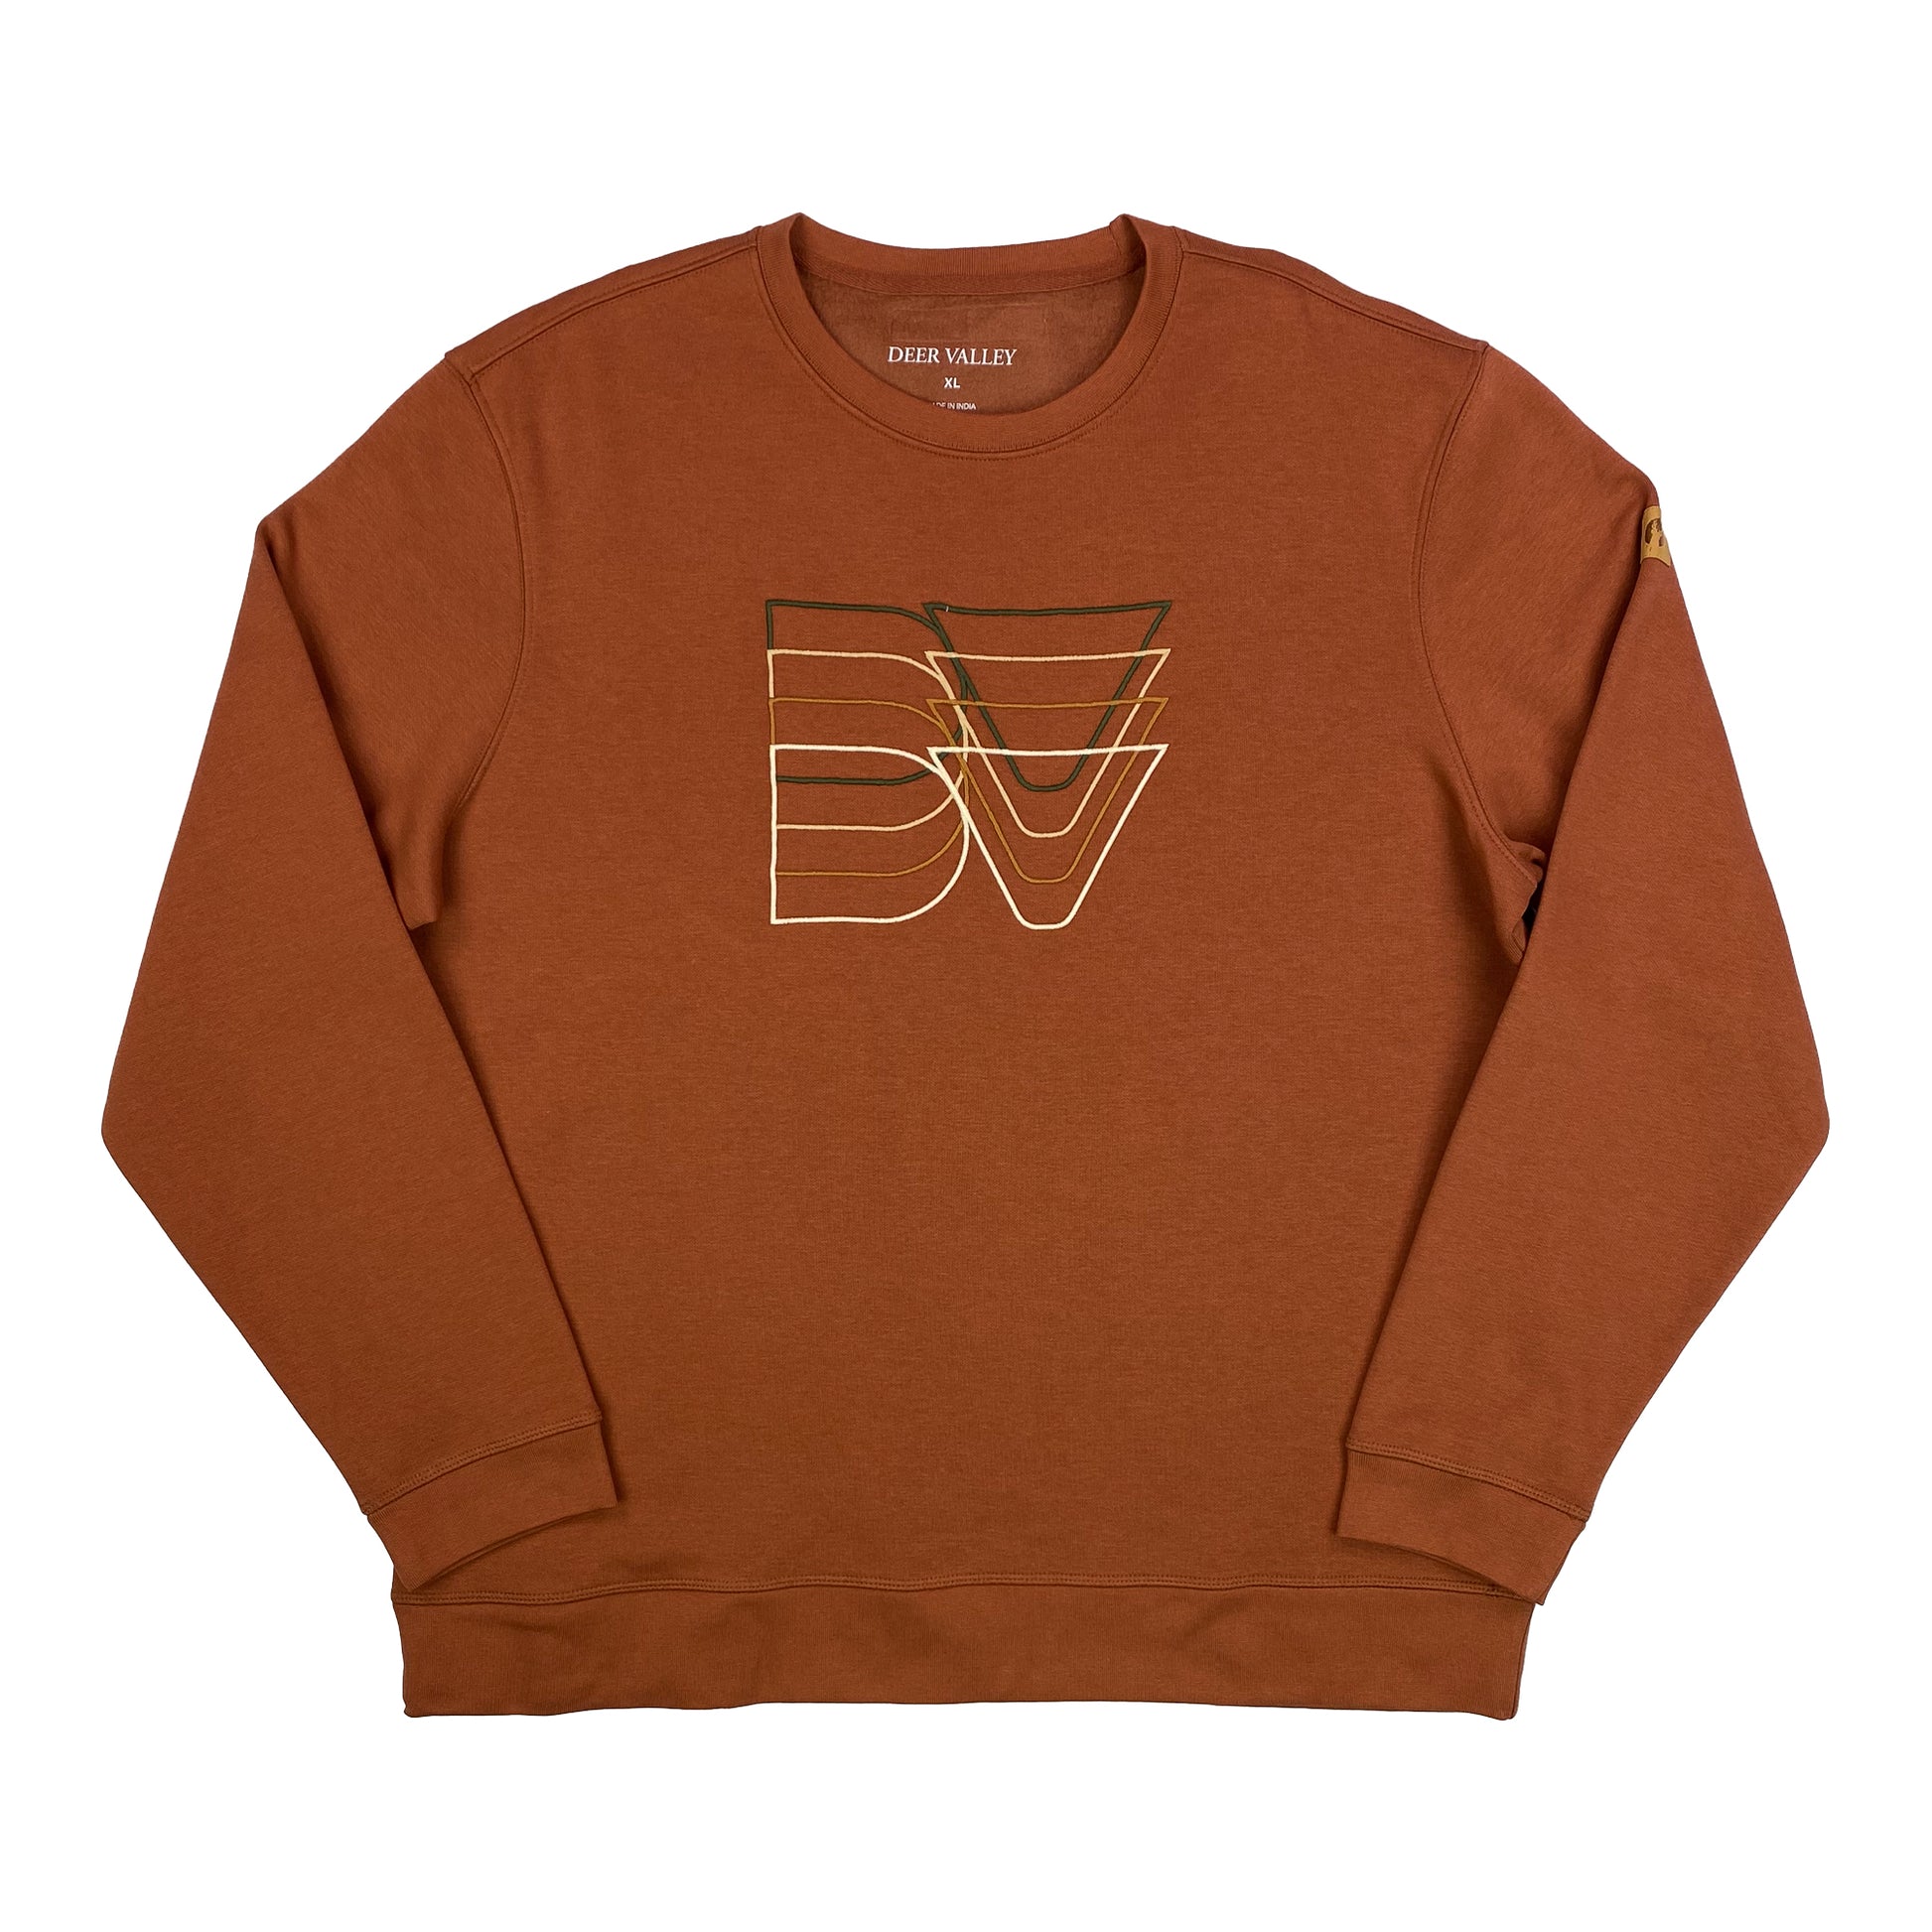 this seasons new crew sweatshirt with the DV logo 